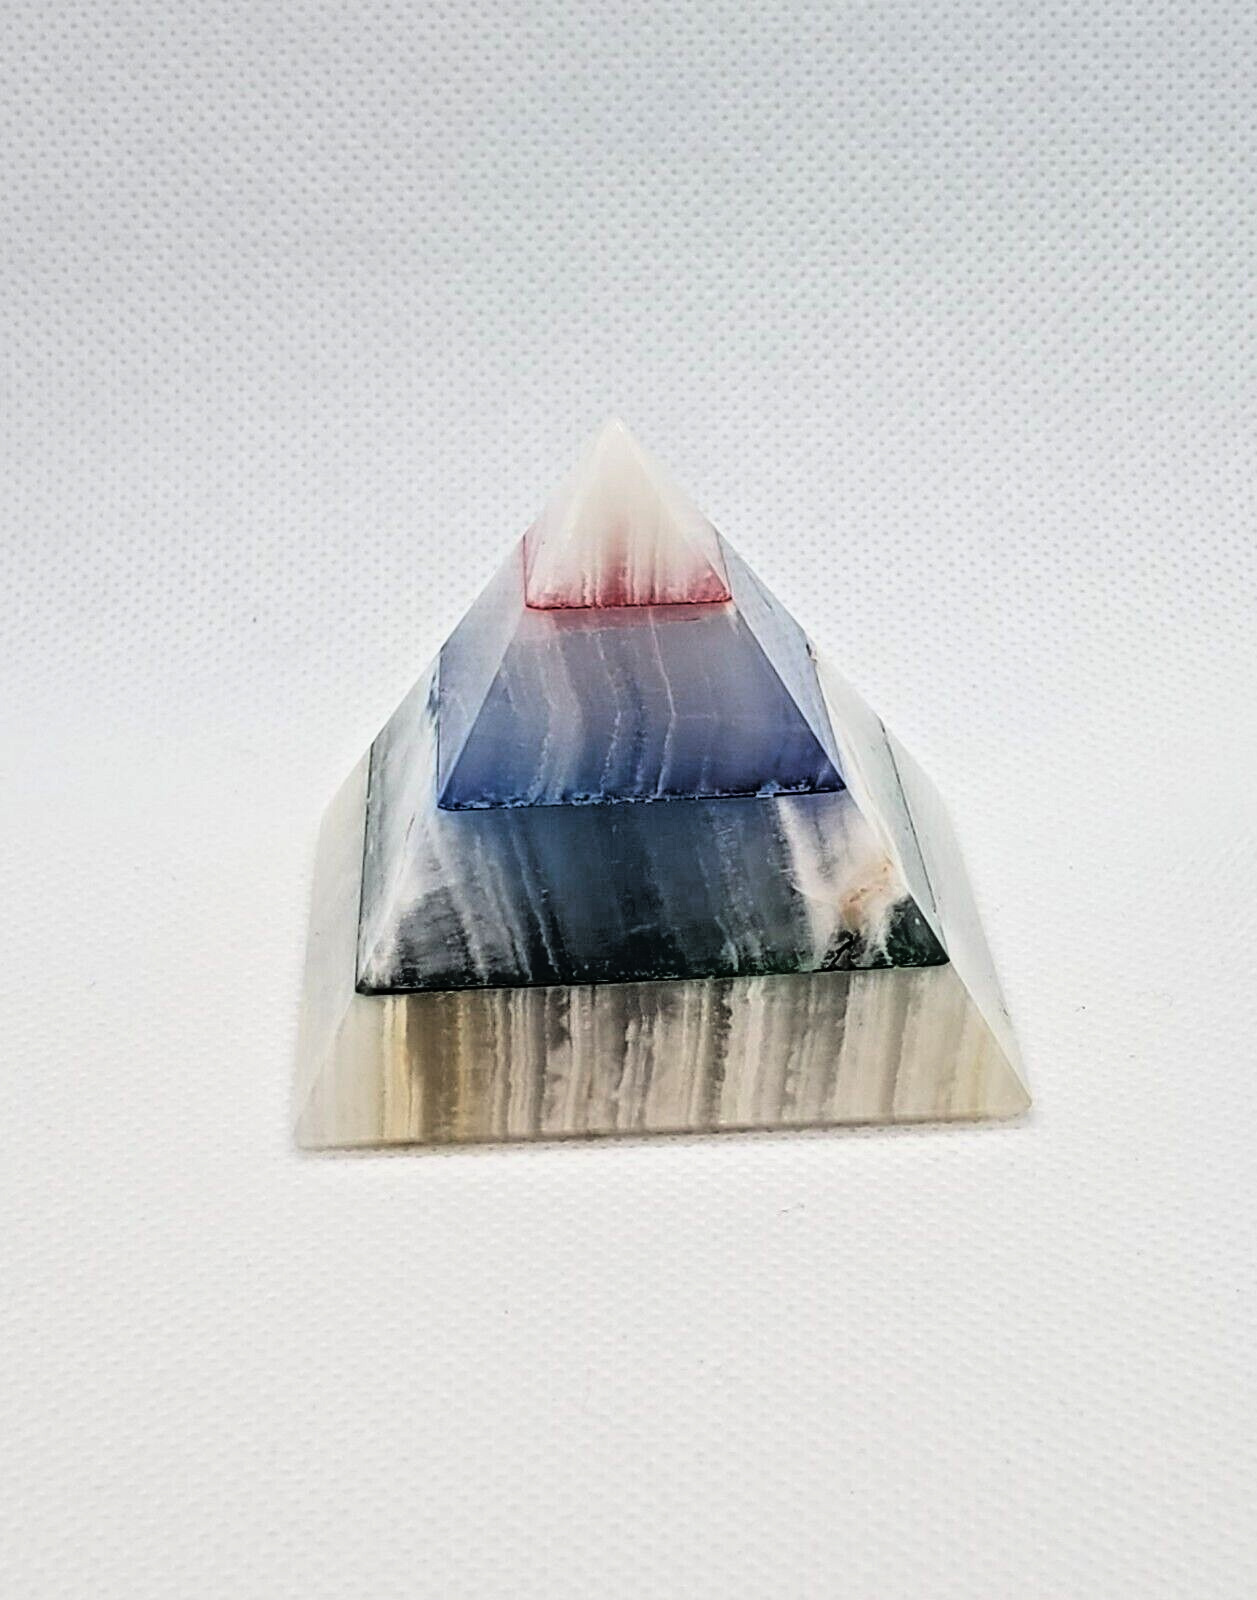 Stunning Multi-colored smooth Gemstone pyramid